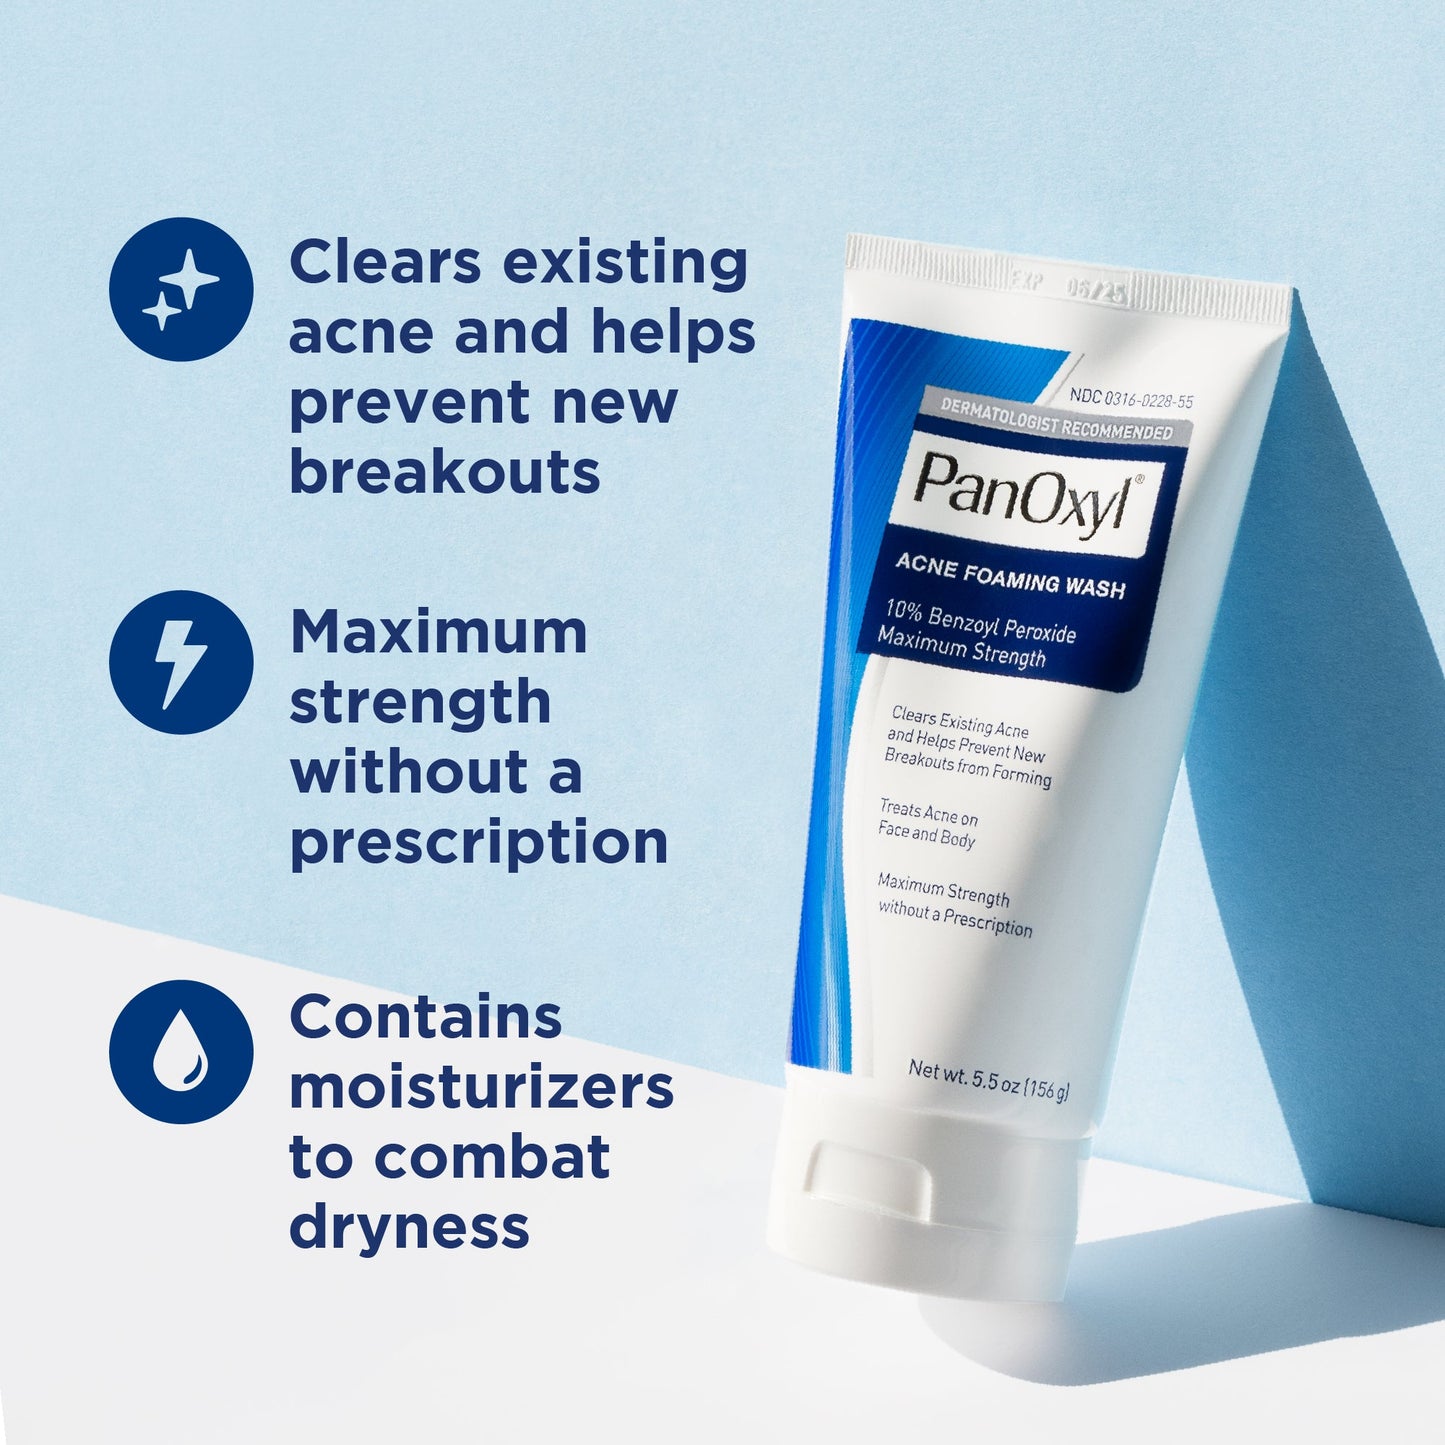 Panoxyl acne foaming wash benzoyl peroxide 10% - Buy Now Pakistan